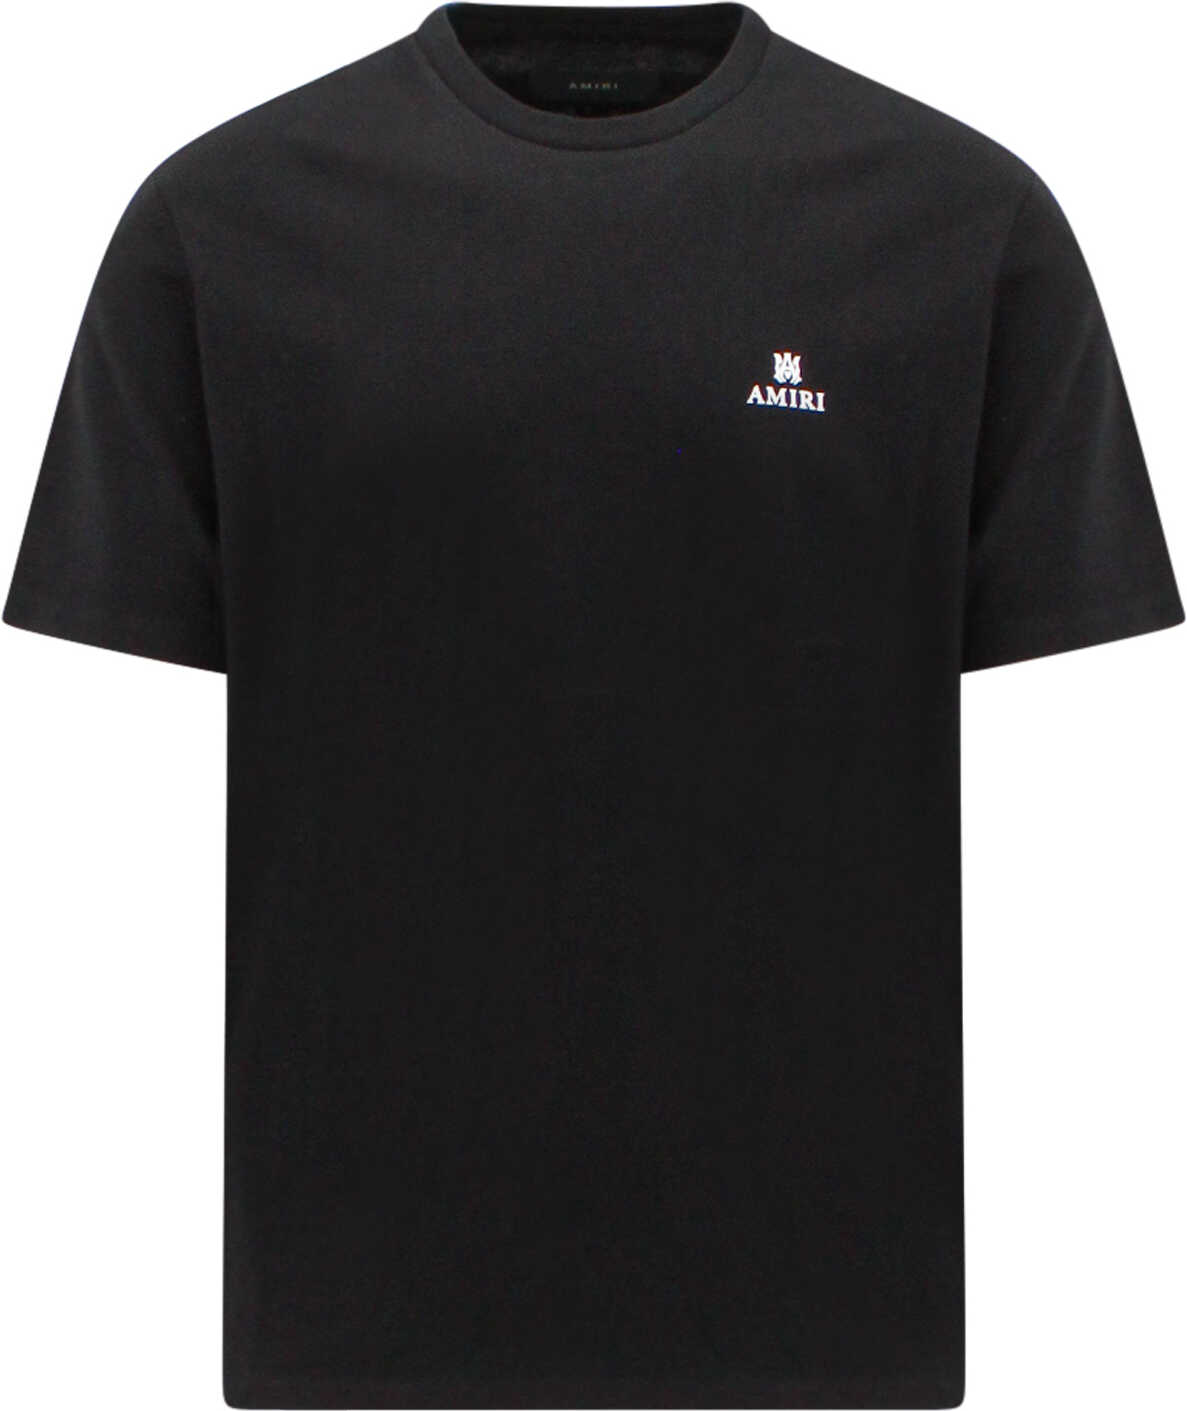 AMIRI T-Shirt Black